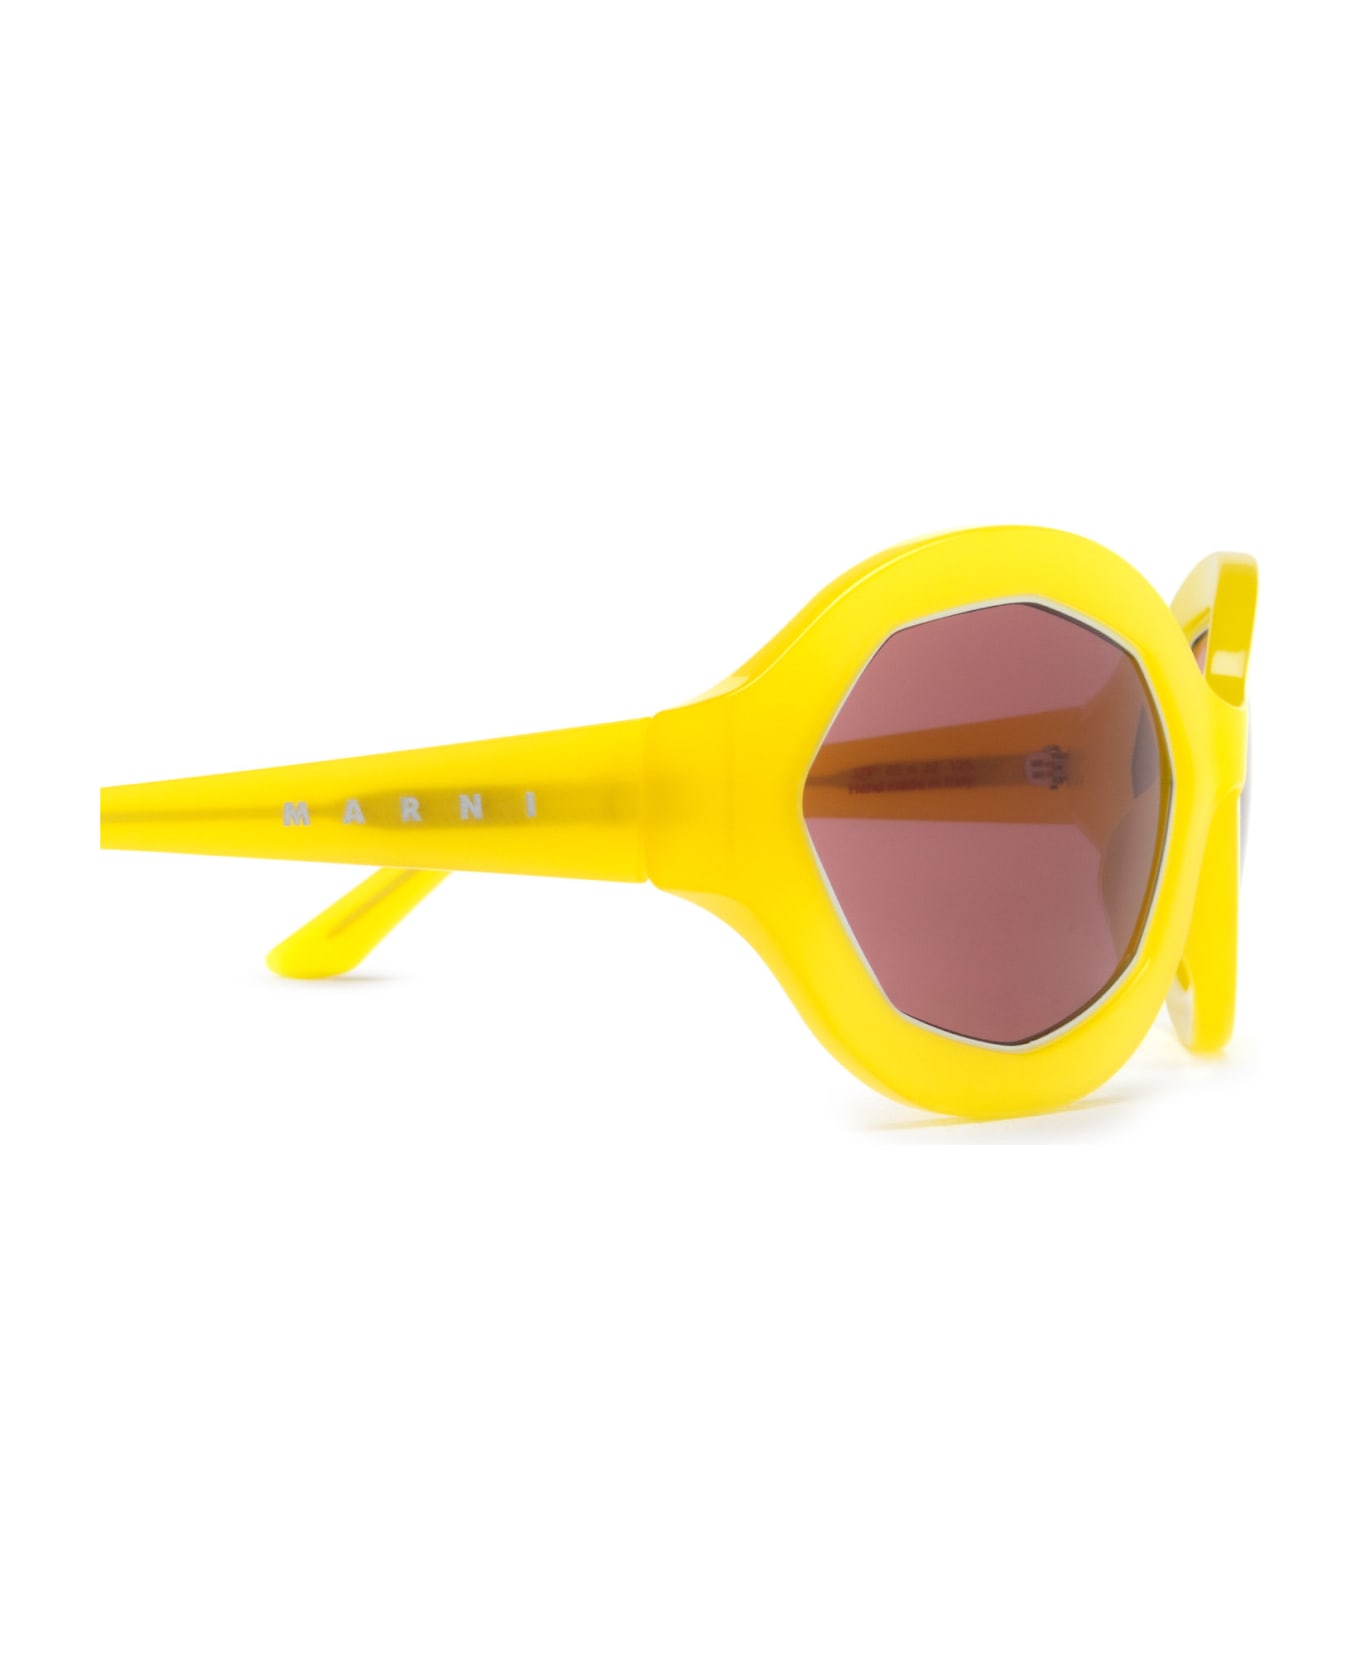 Marni Eyewear Cumulus Cloud Yellow Sunglasses - Yellow